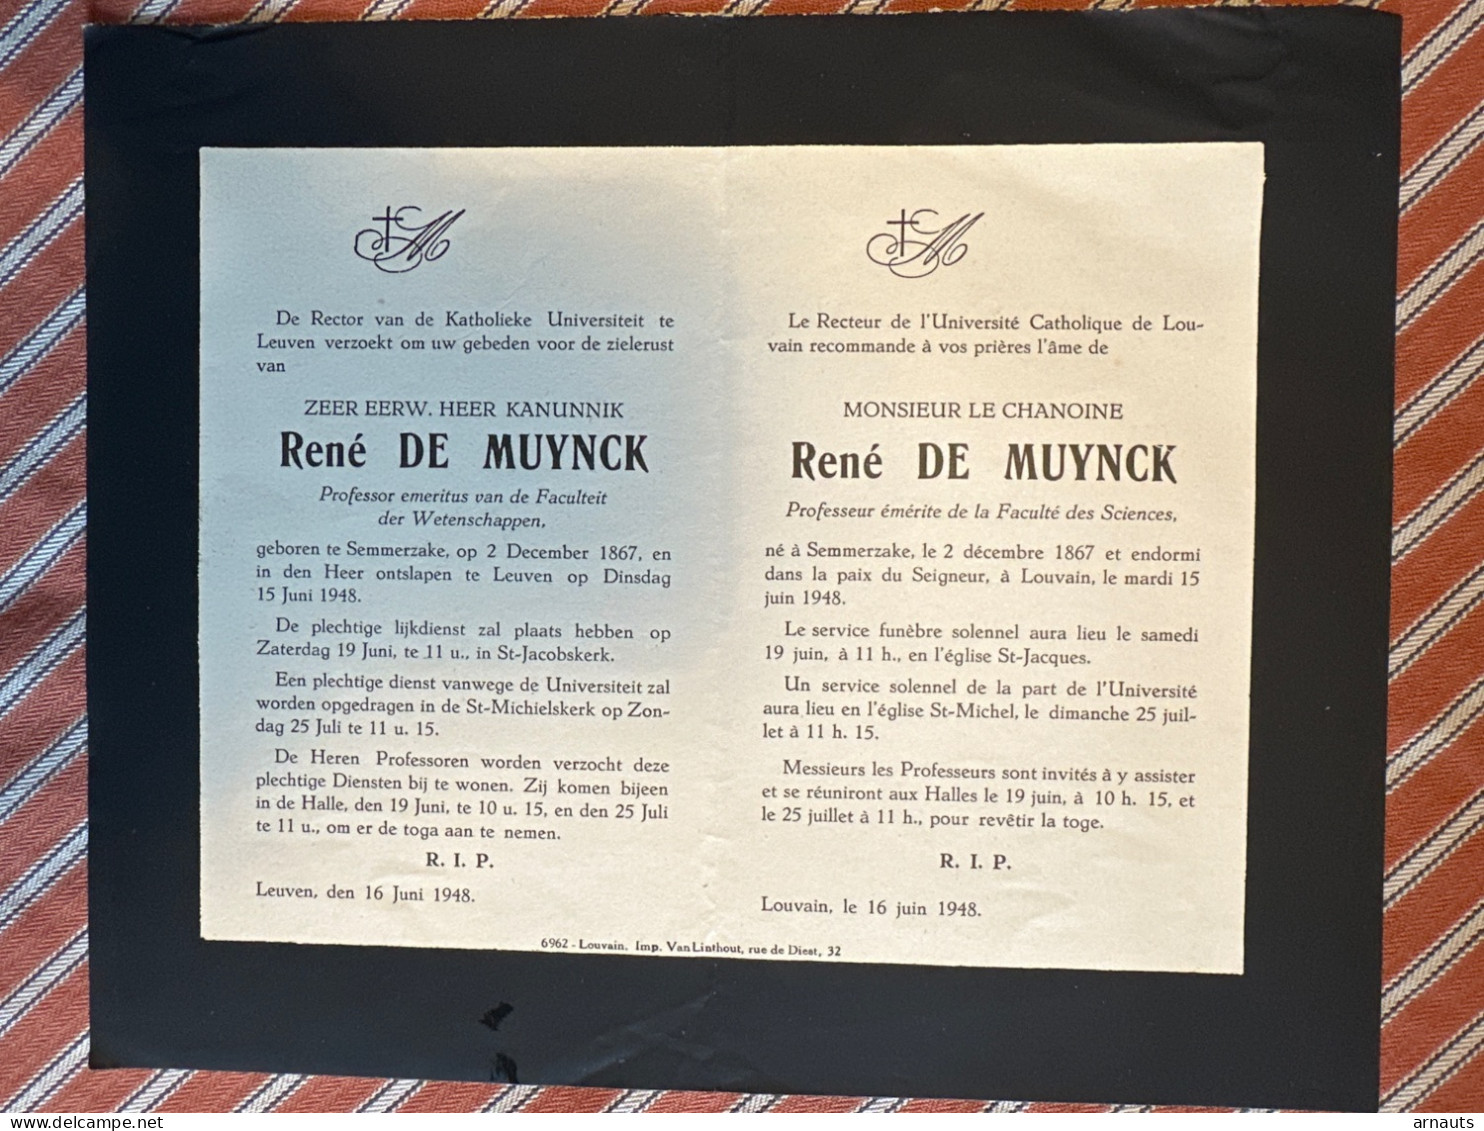 Rector Kath Univ Leuven Verzoekt Gebed Kanunnik Rene De Muynck Professor Faculteit Wetenschappen *1867 Semmerzake +1948 - Esquela